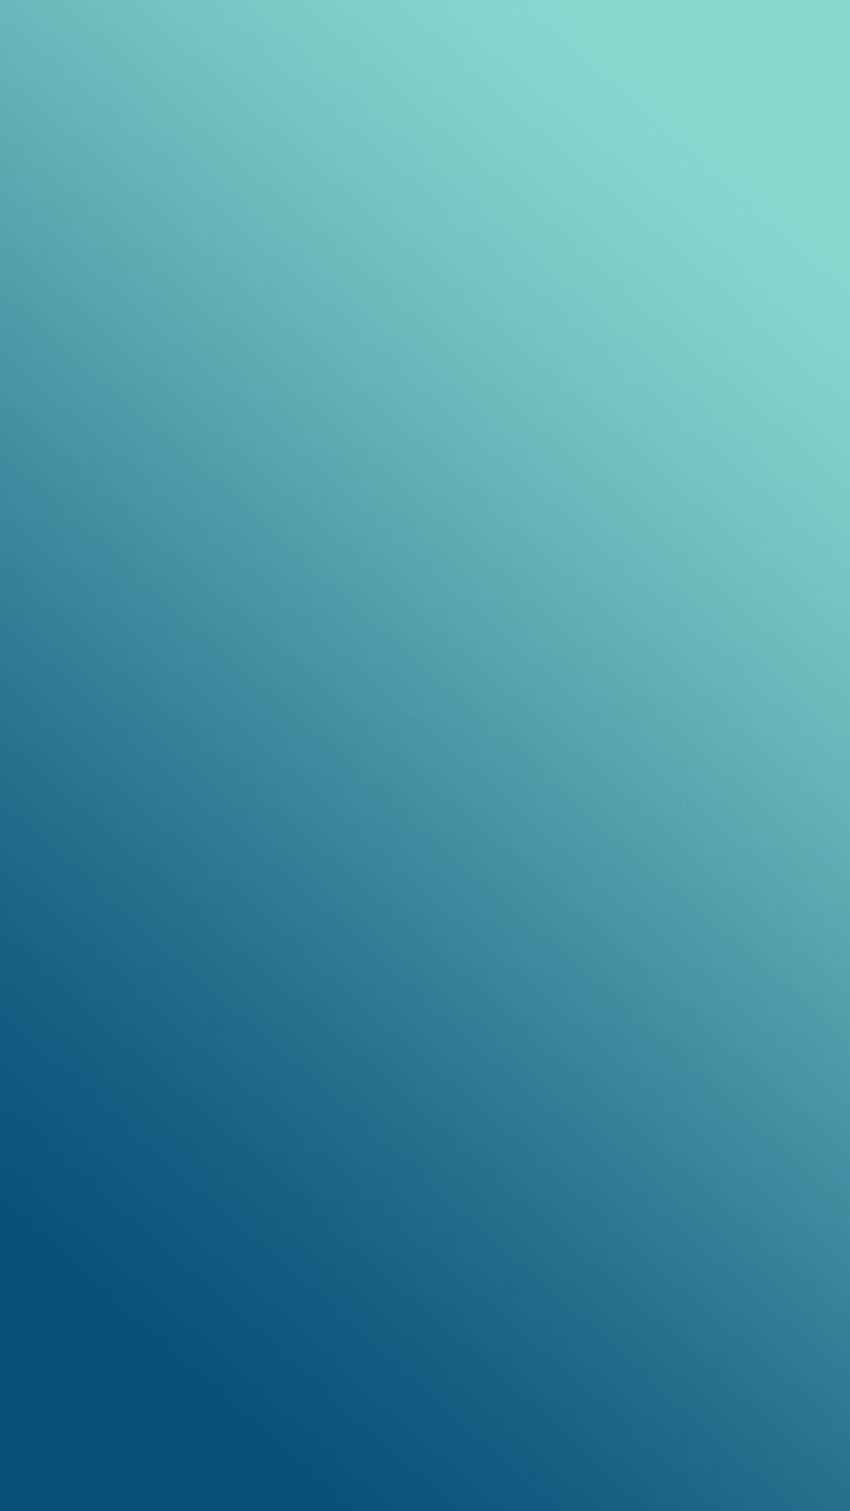 Azul Teal, Cor Turquesa Papel de parede de celular HD